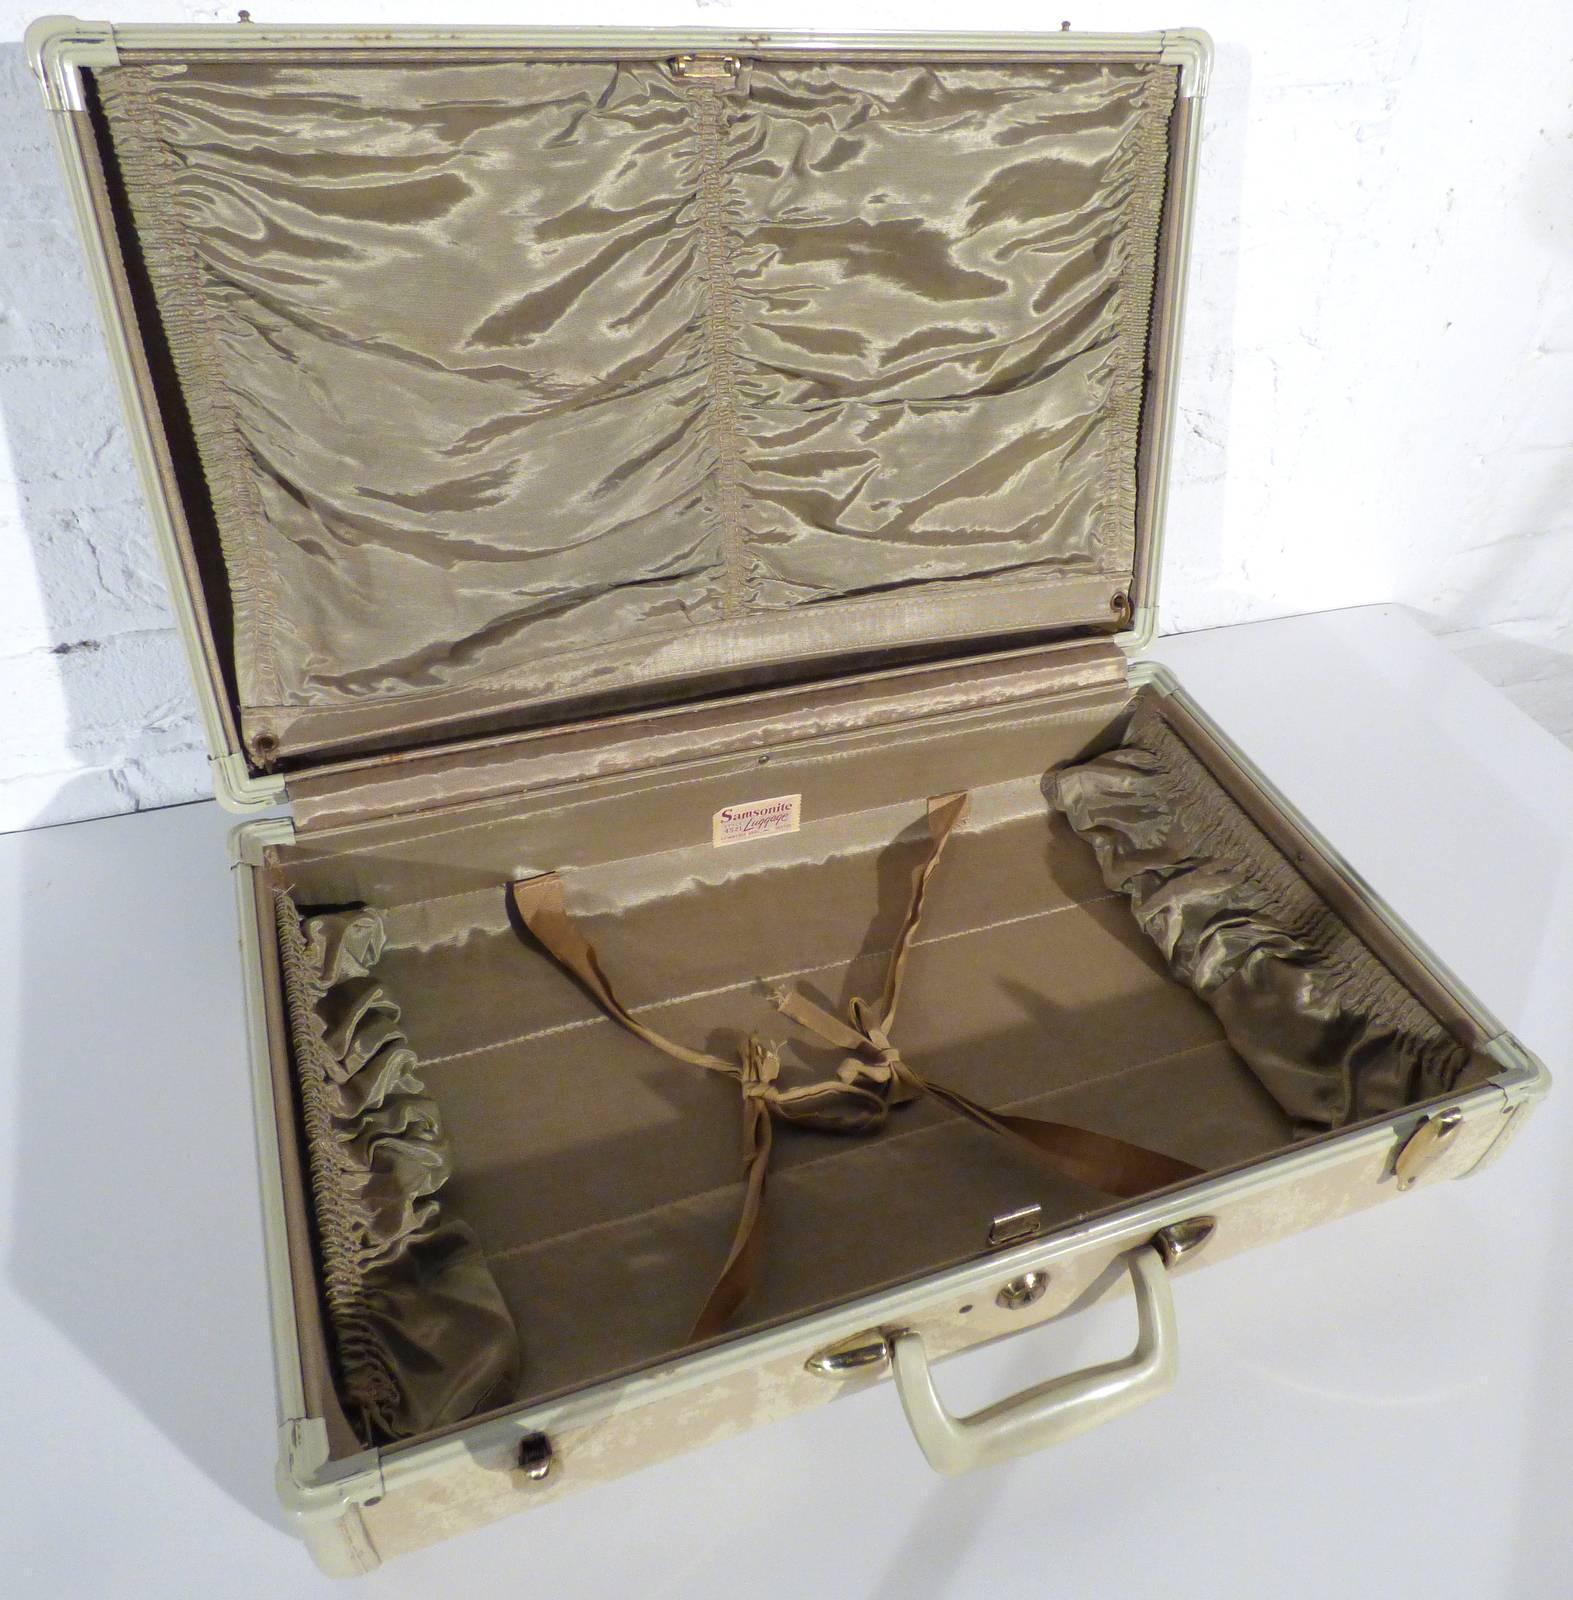 American Samsonite Vintage Suitcase For Sale